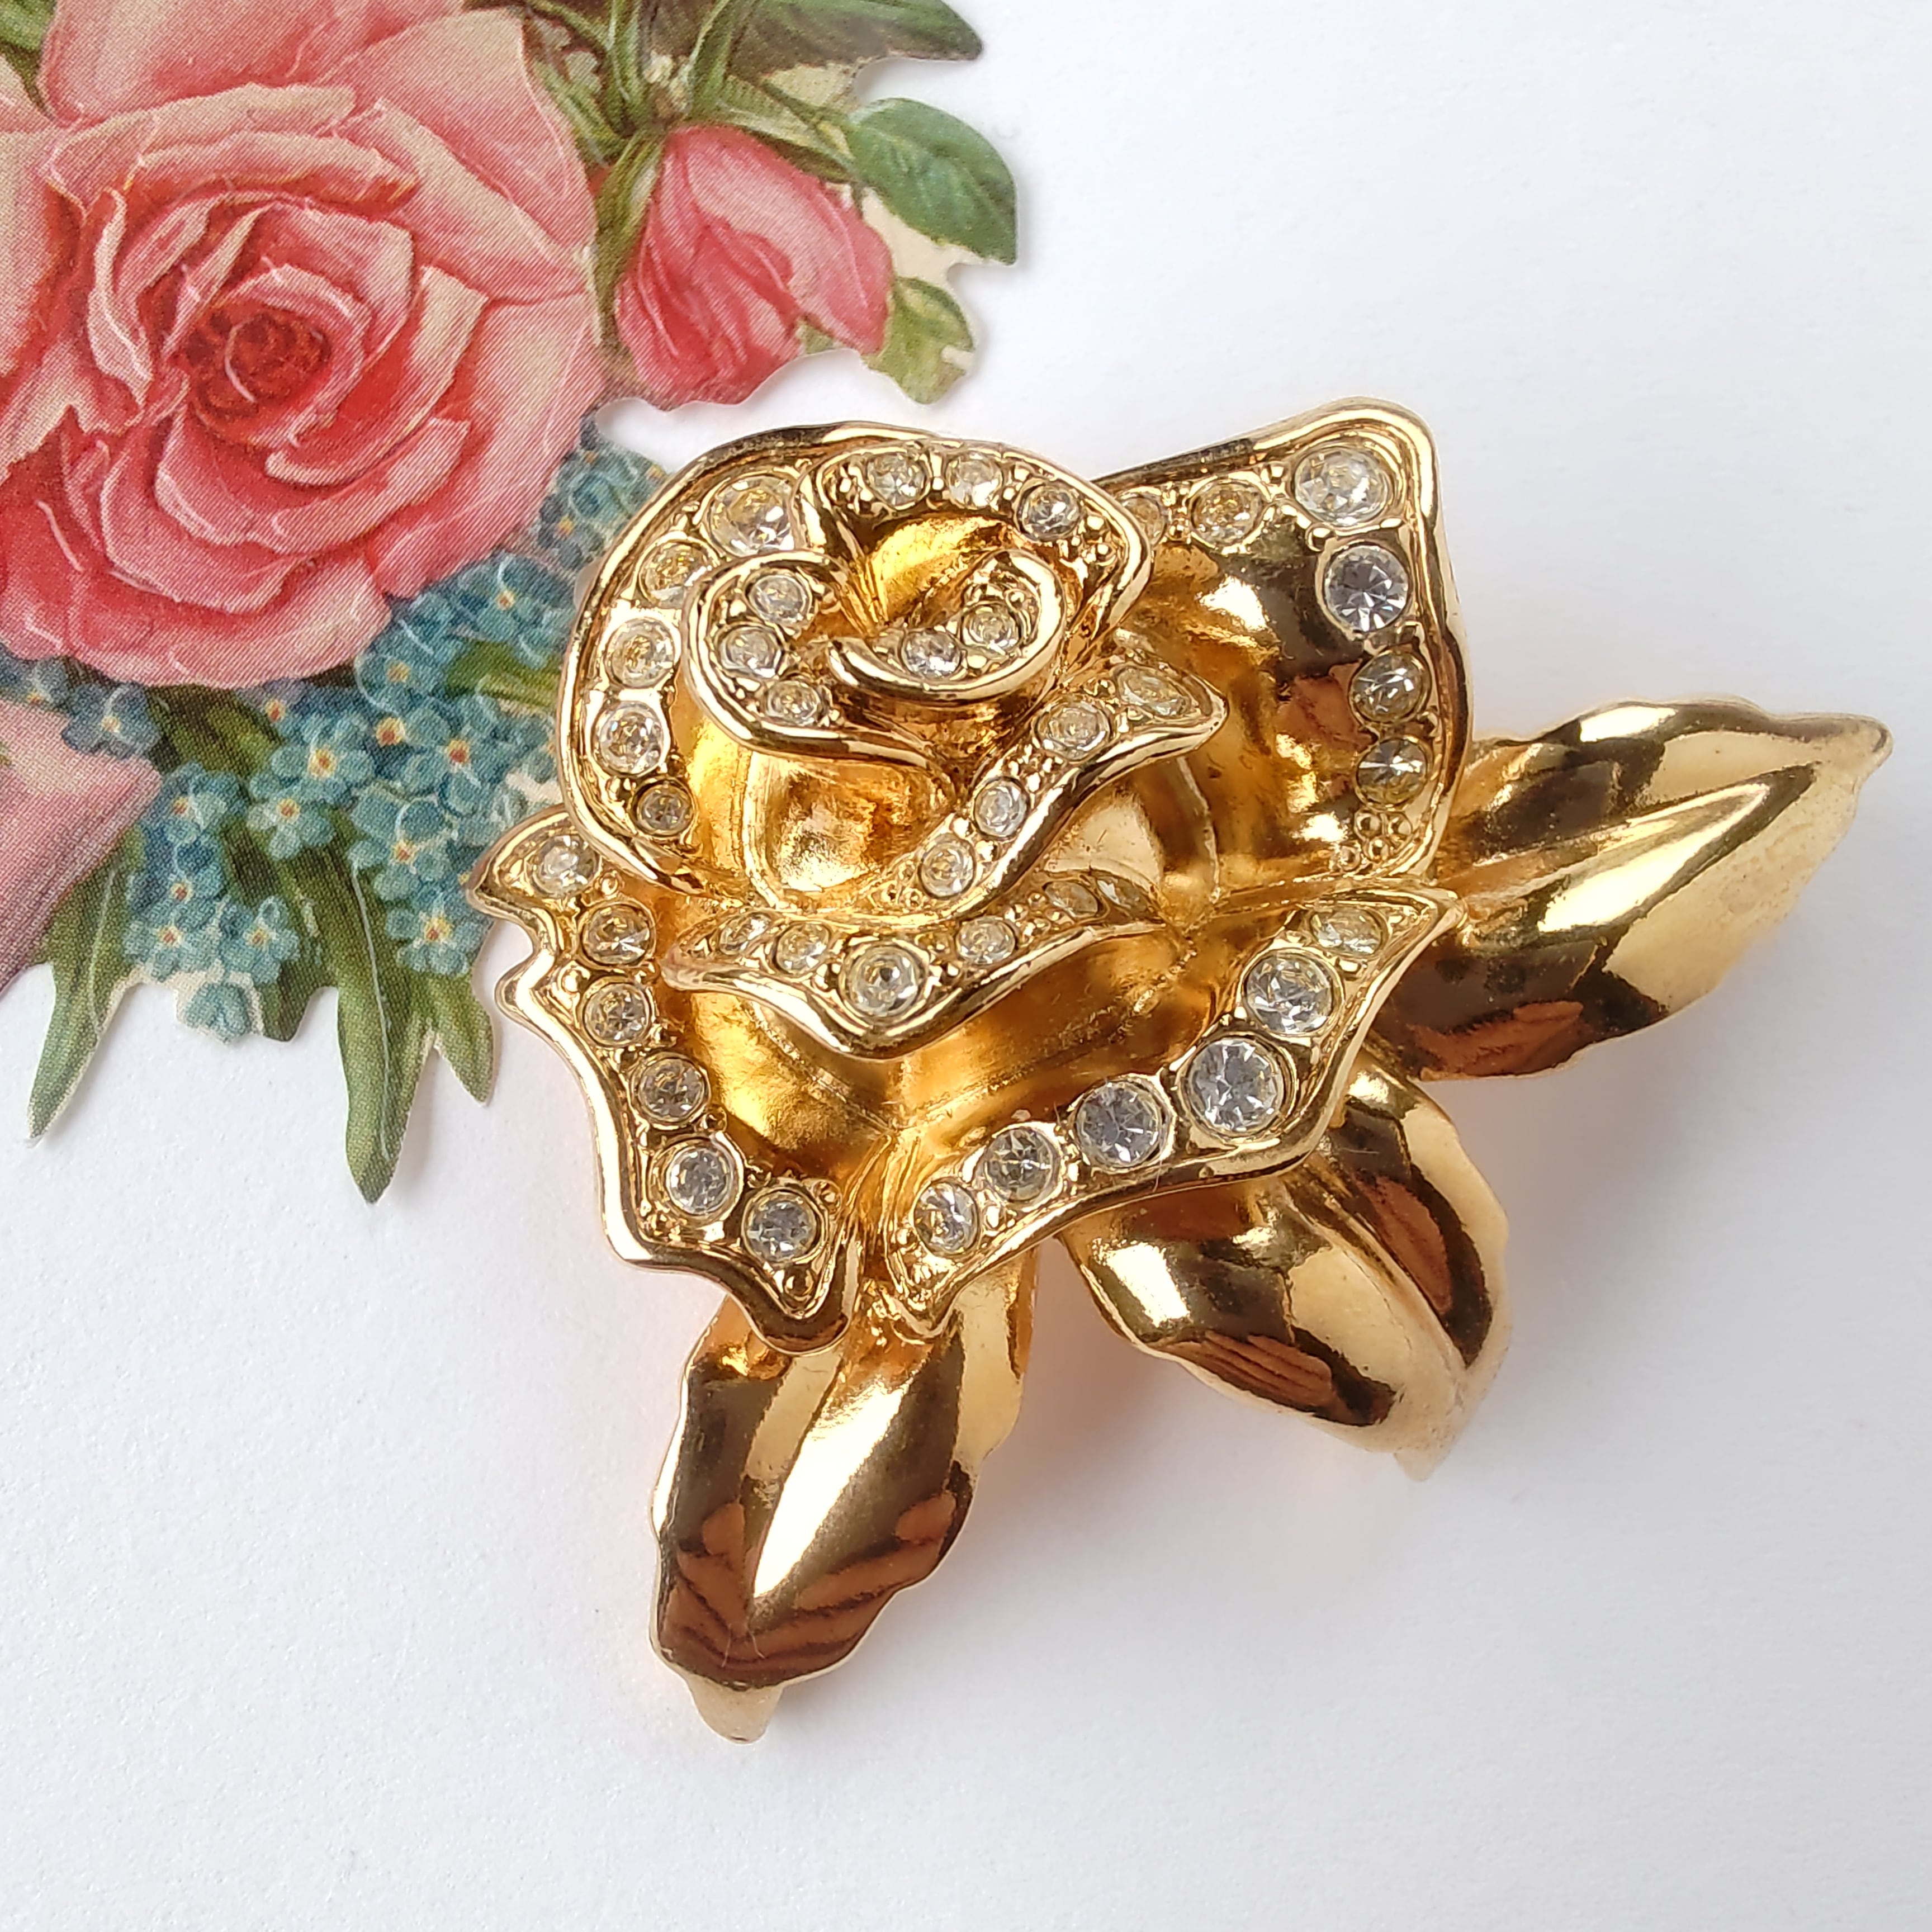 《Avon》 “Rose Passion” vintage brooch エイボン ヴィンテージブローチ